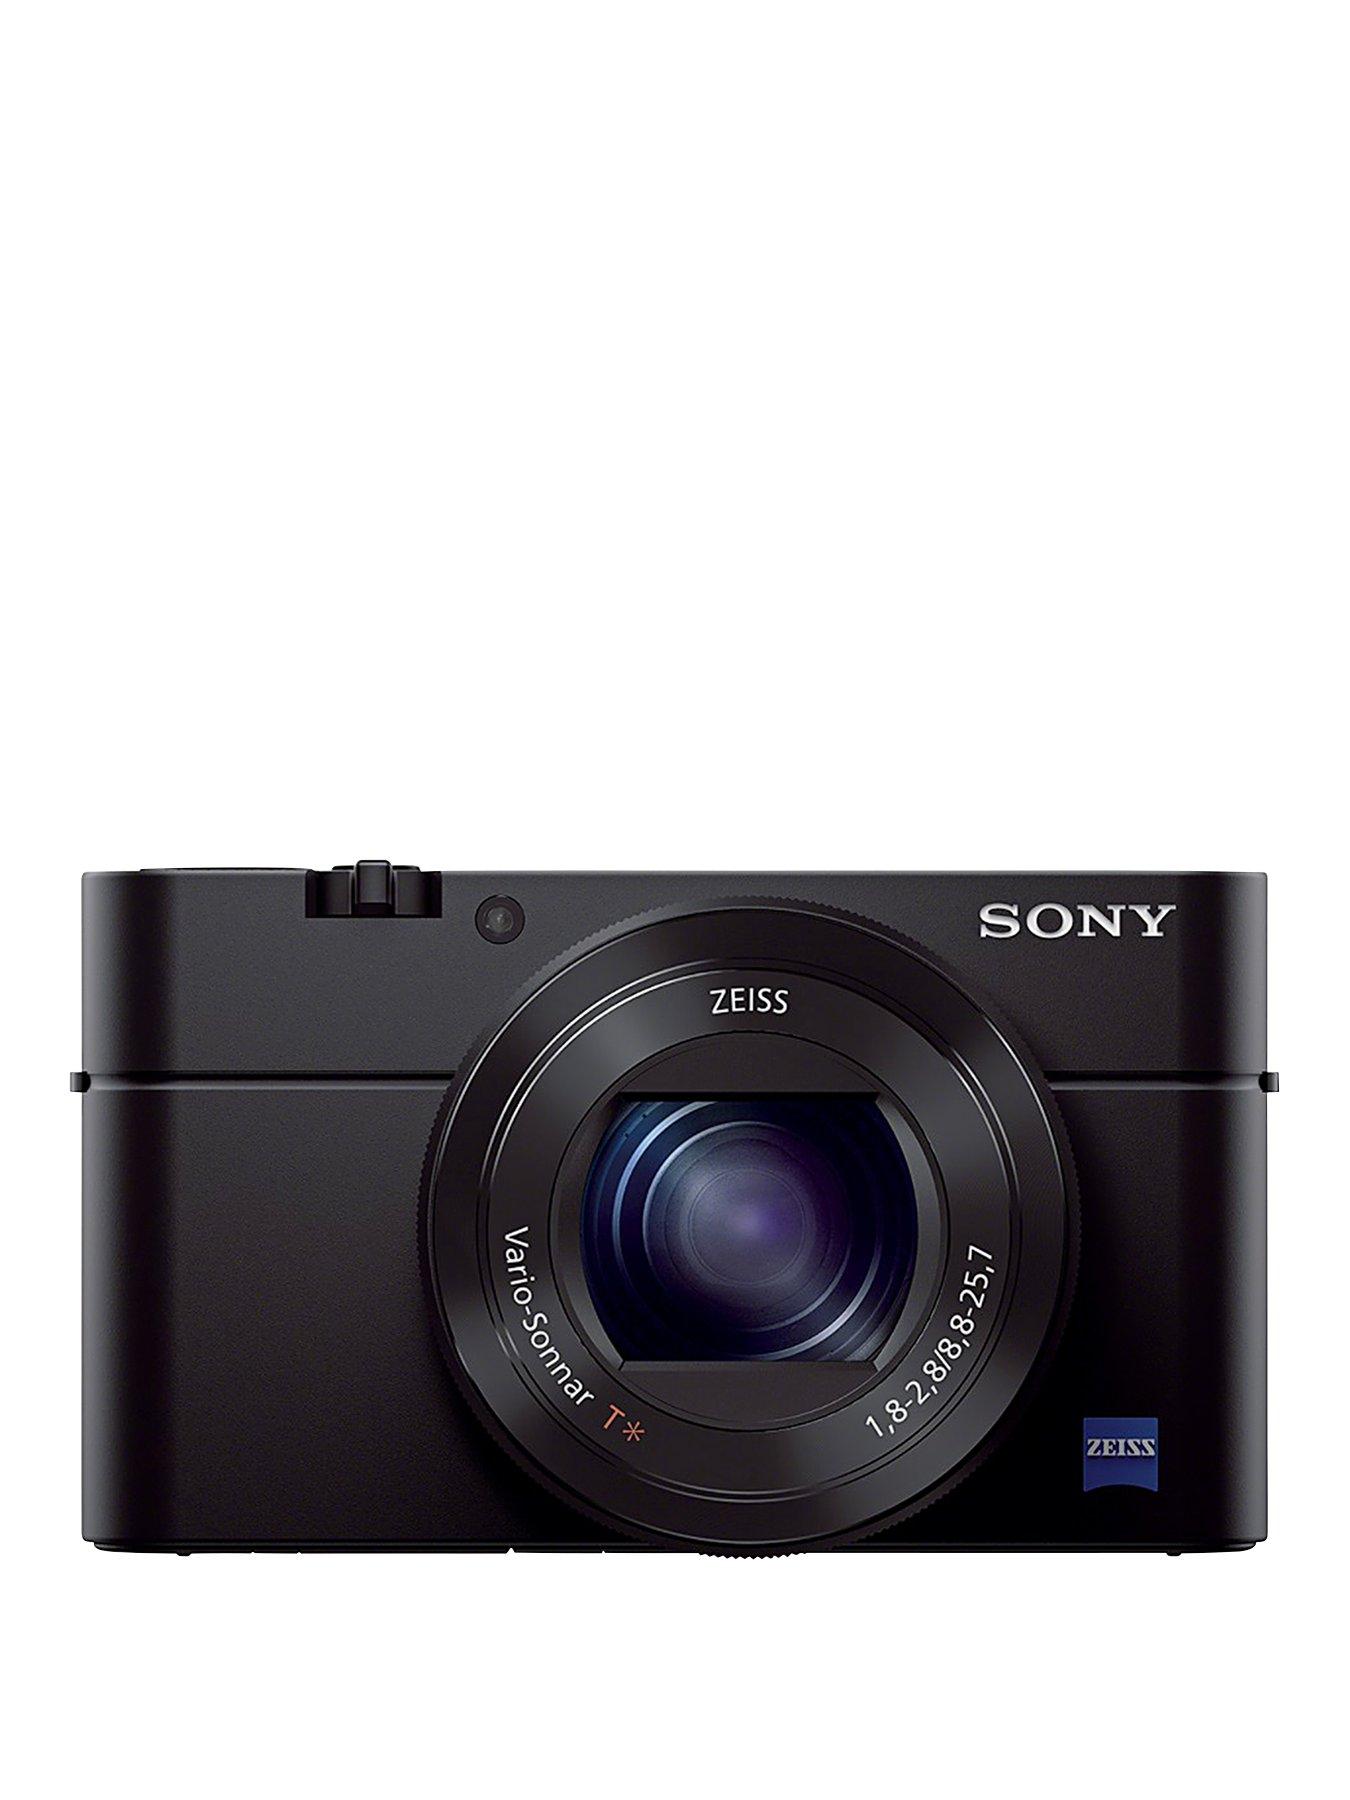 Sony Cybershot DSC RX100M3 Premium Digital Compact Camera